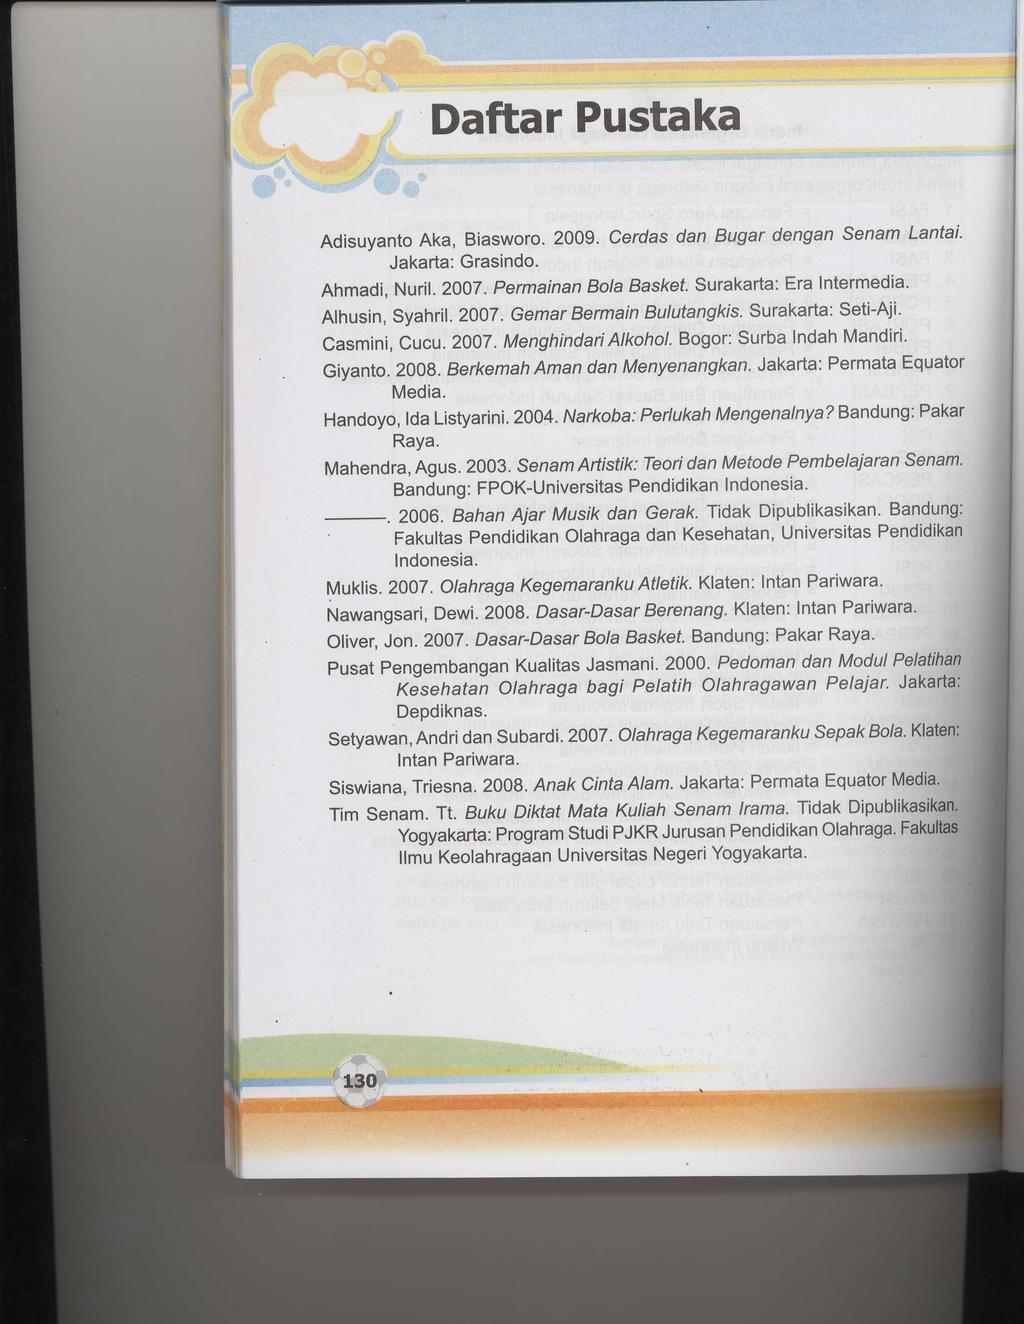 Daftar Pustaka ro,r,r, rr Adisuyanto Aka, Biasworo. 2009. Cerdlas dan Bugar dengan Senam Lantai' Jakarta: Grasindo. Ahmadi, Nuril. 2007.